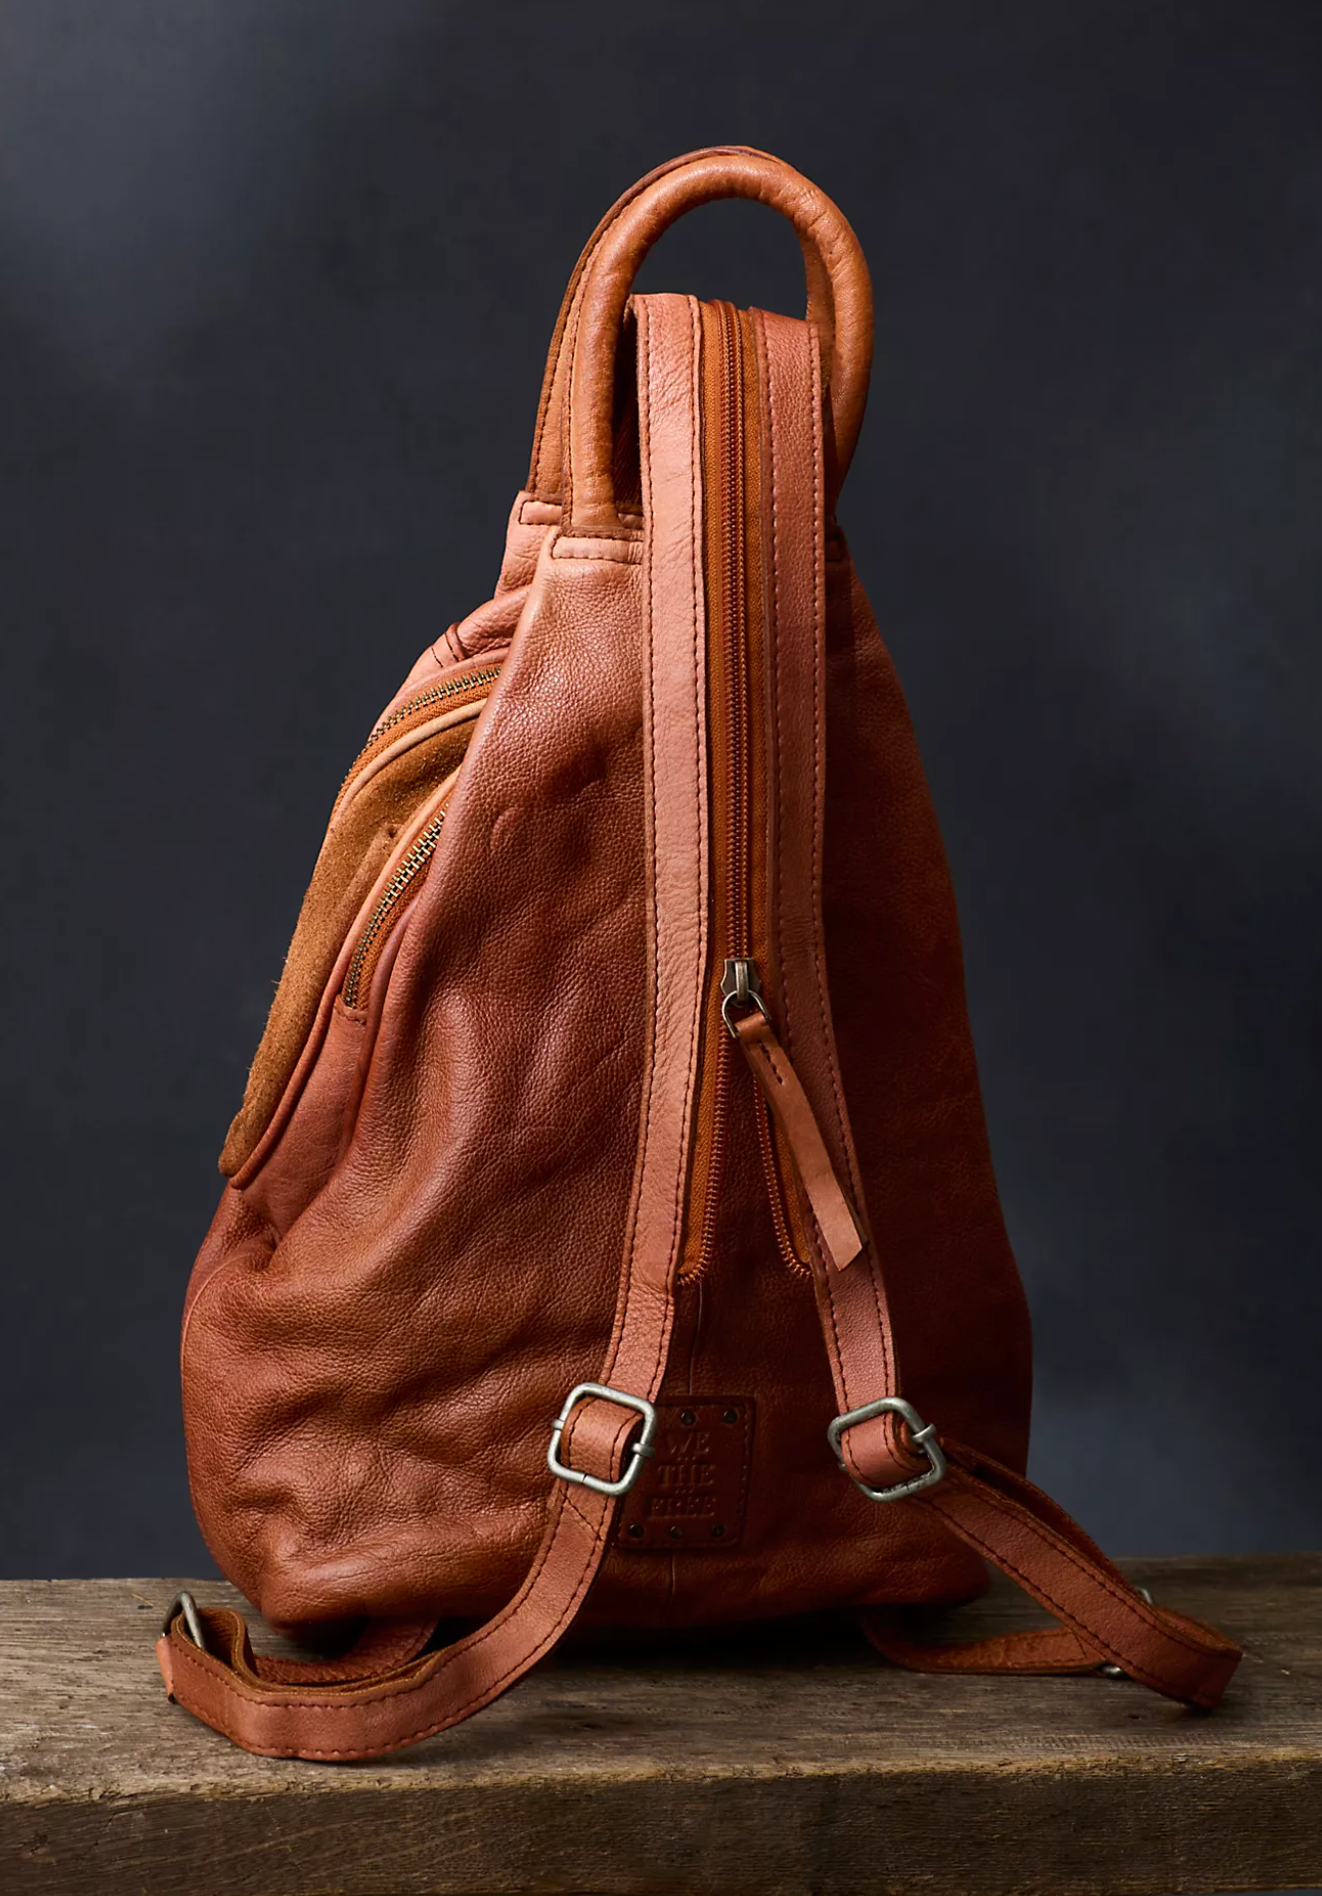 SoHo Convertible Leather Bag